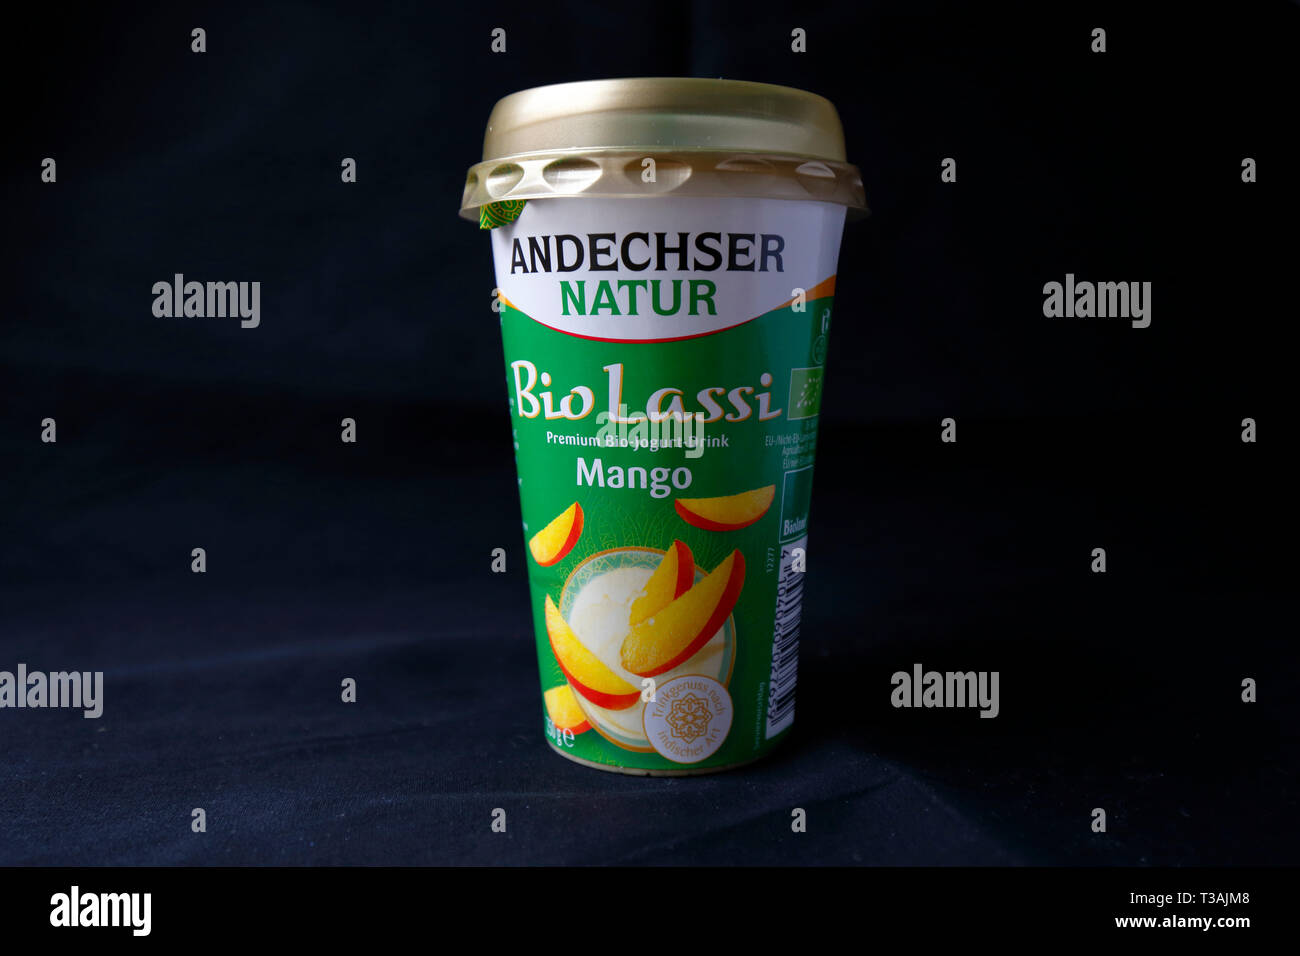 Andechser natur Bio Lassi mango yogurt drink Stock Photo